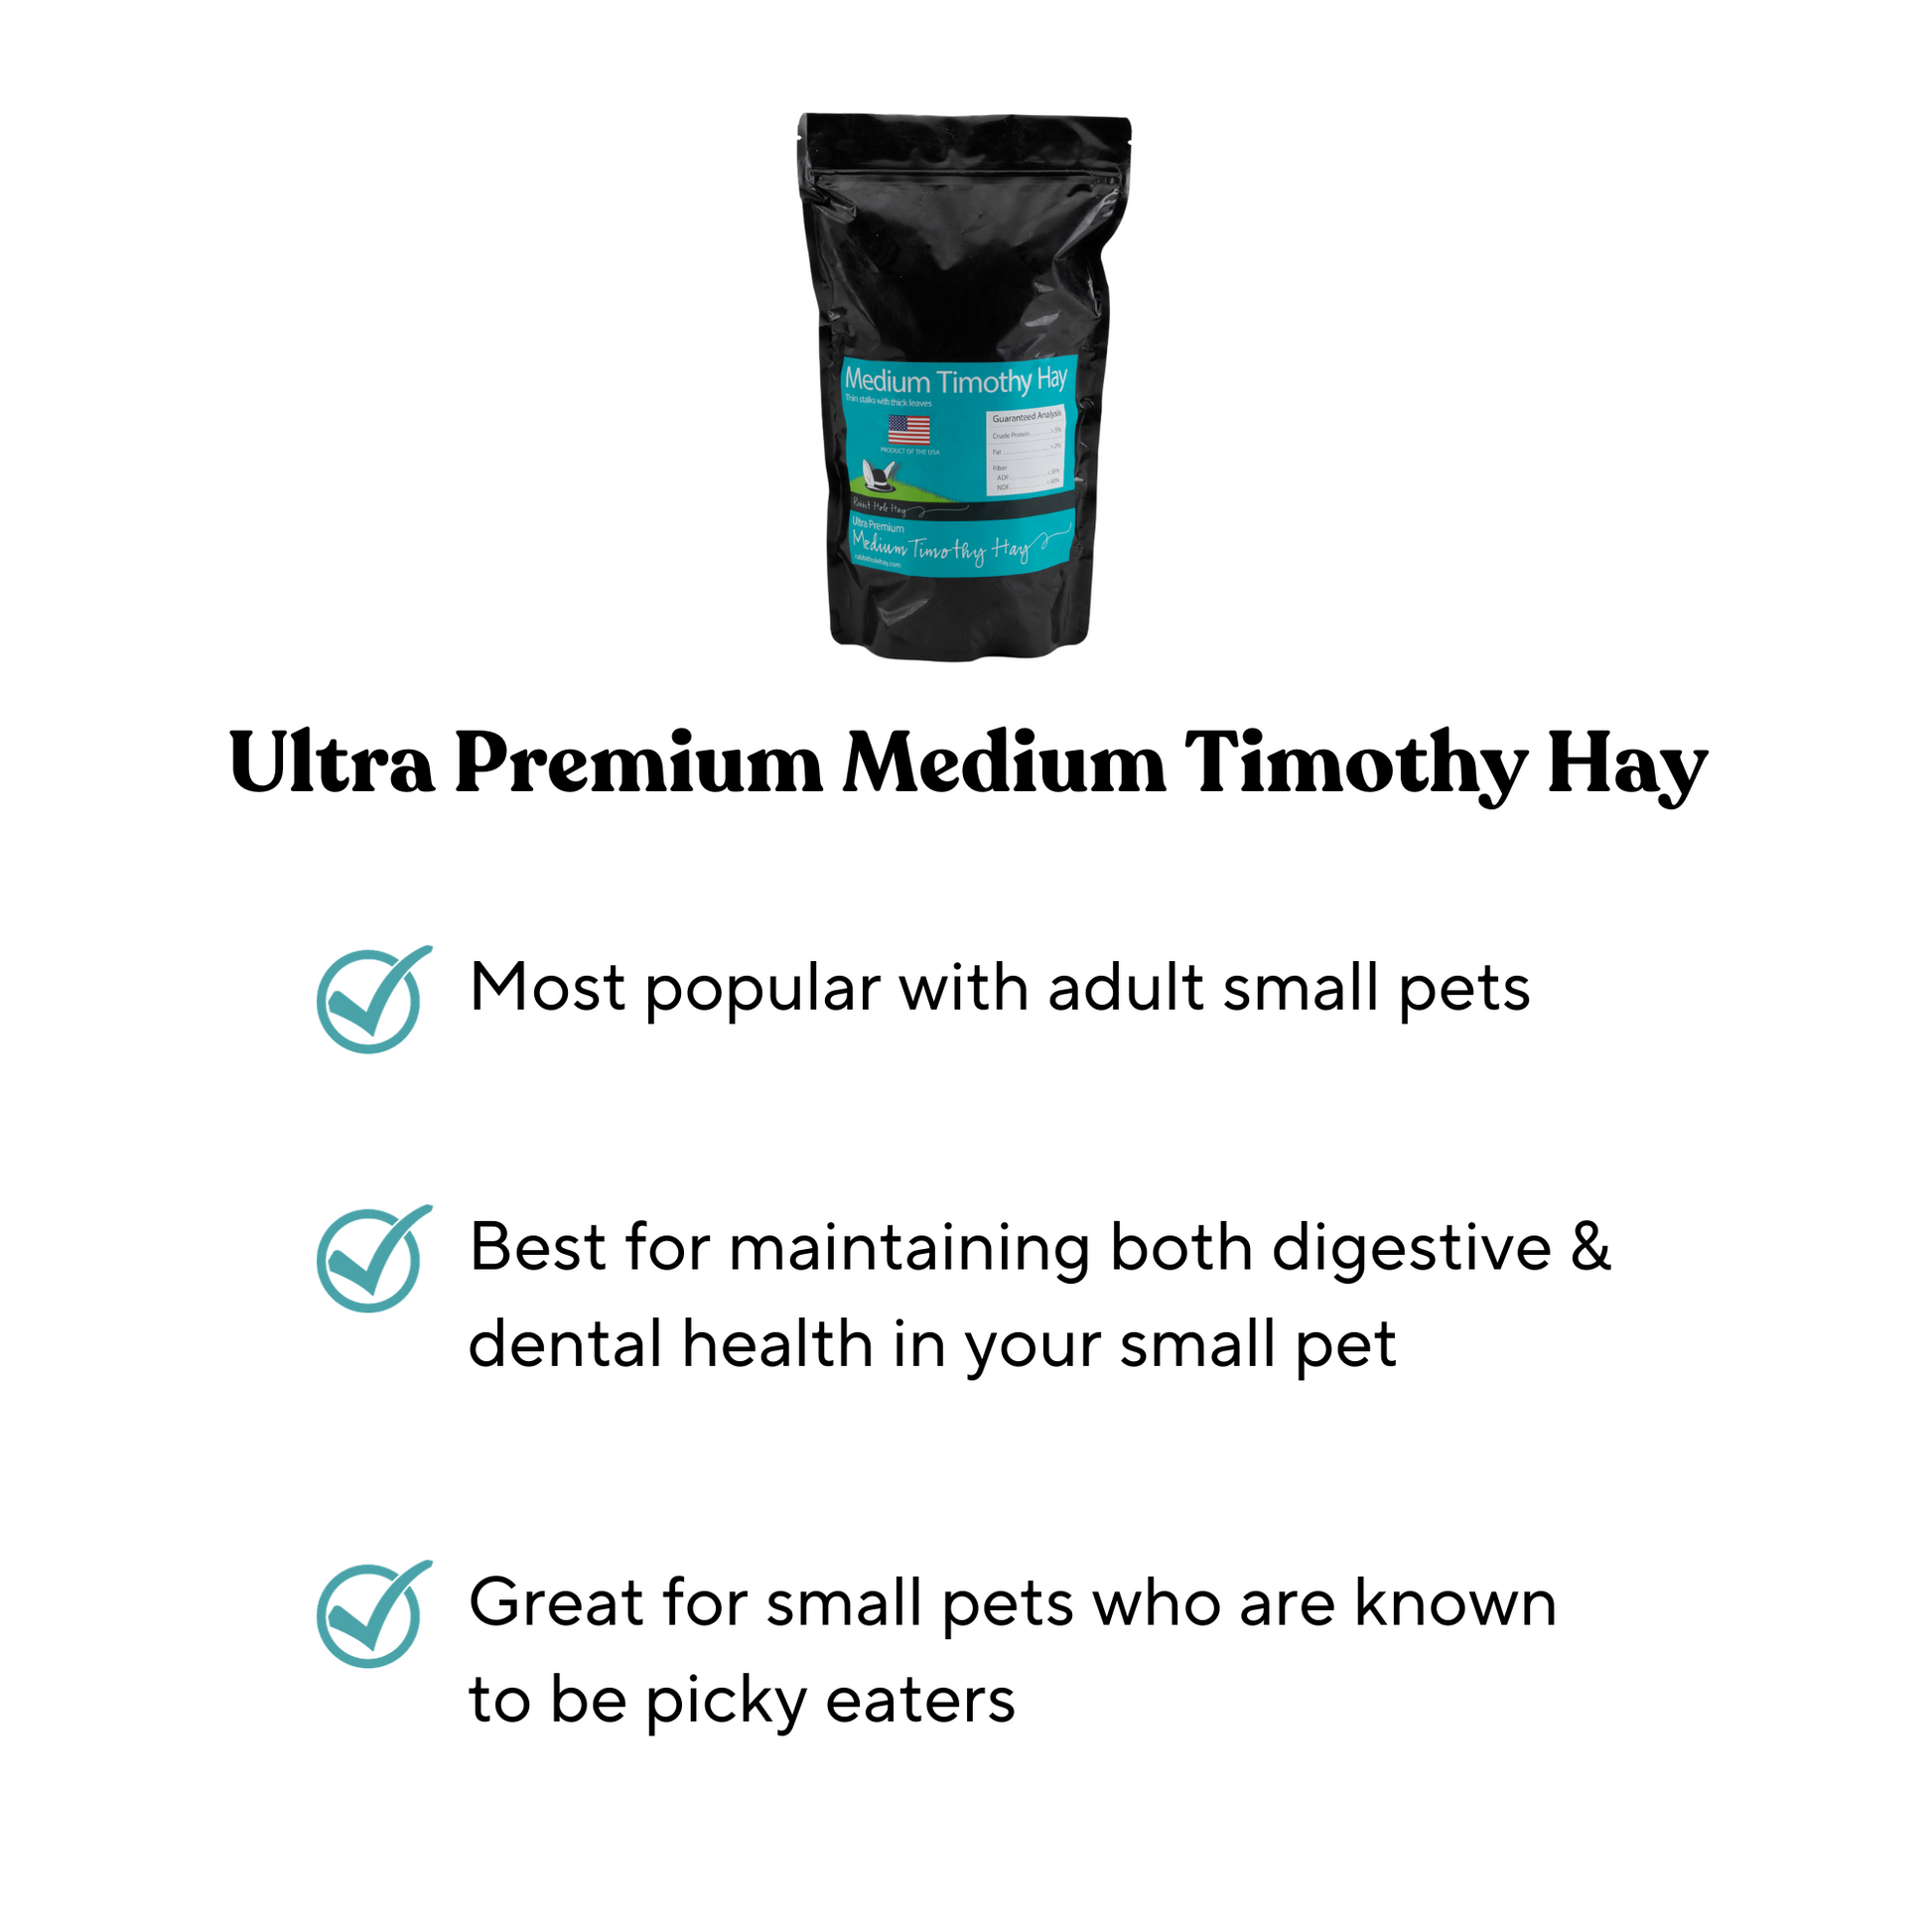 Ultra Premium Medium Timothy Hay Benefits